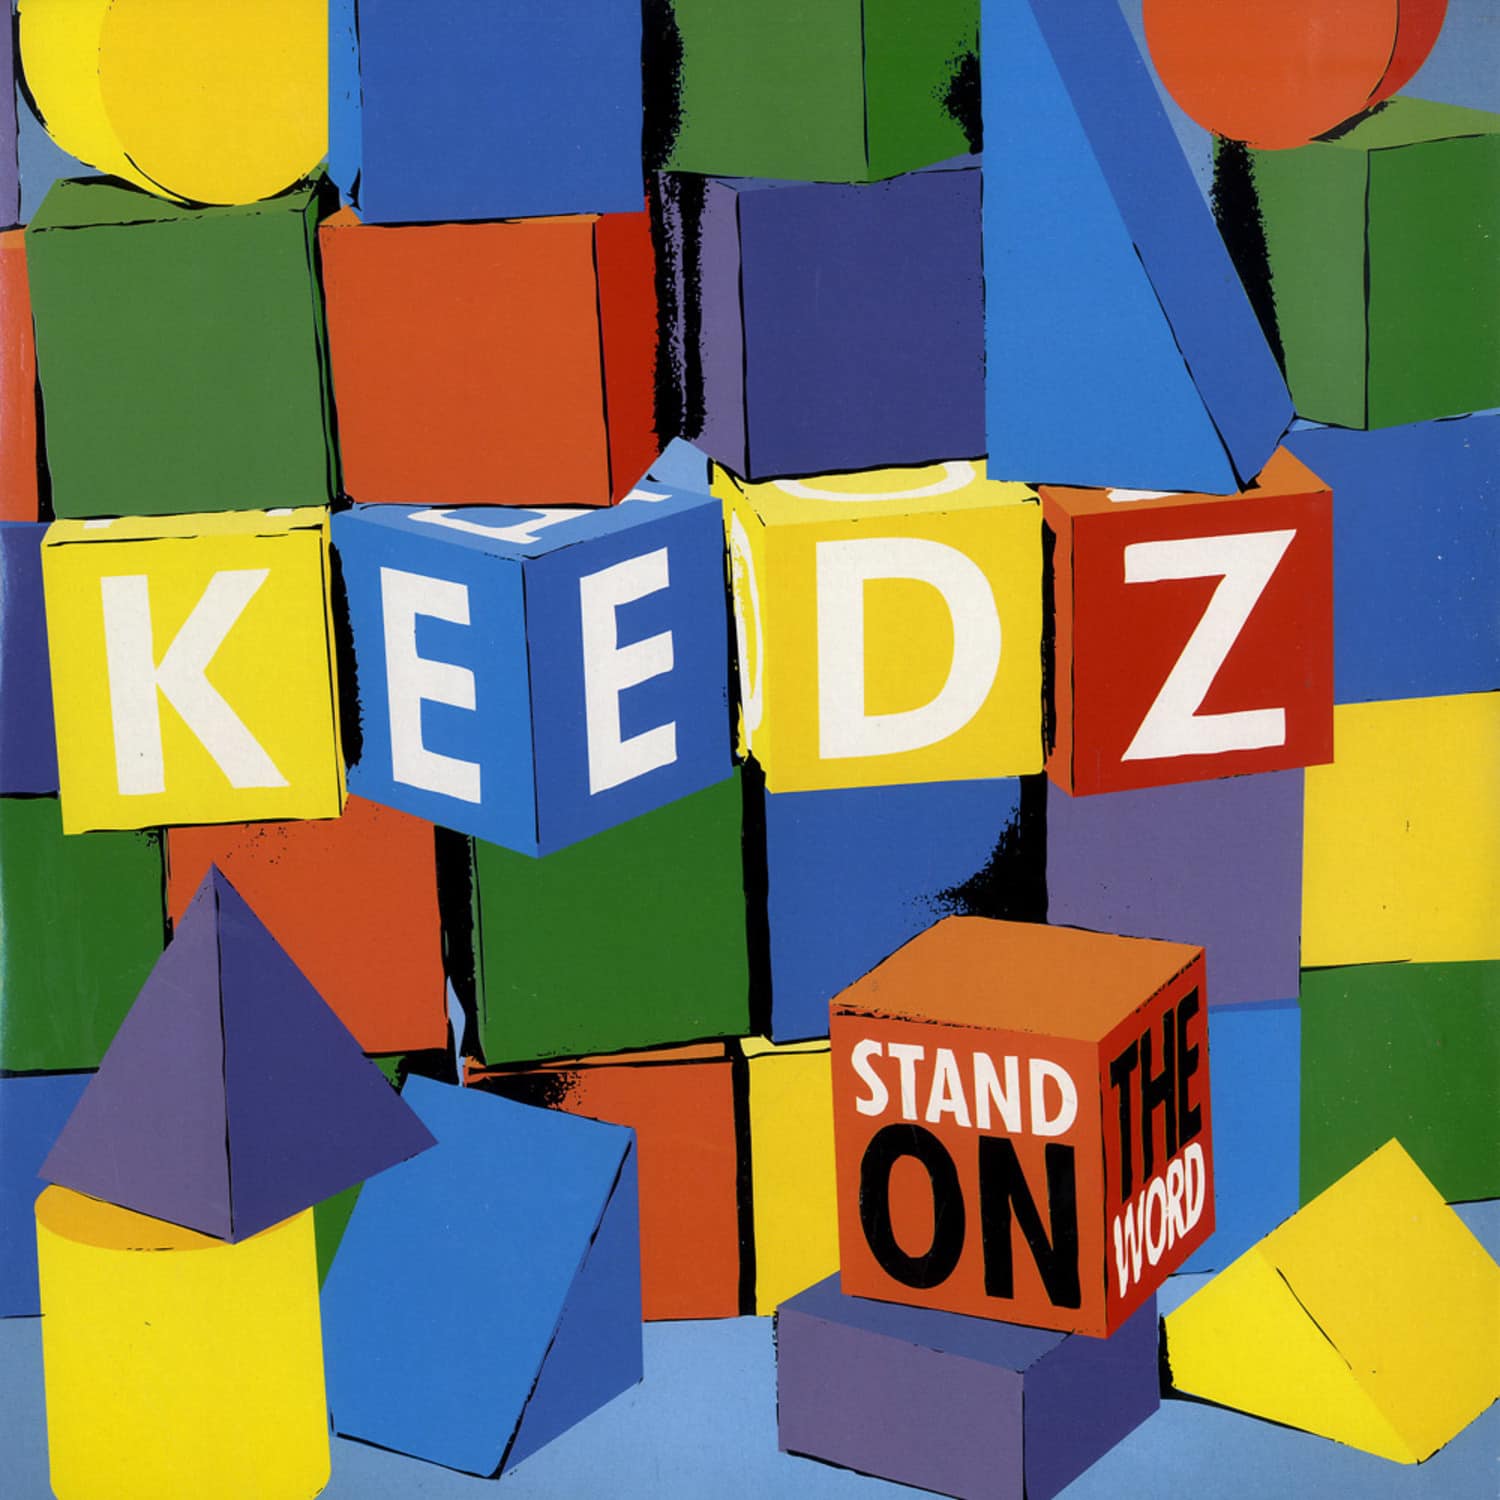 Keedz - STAND ON THE WORD